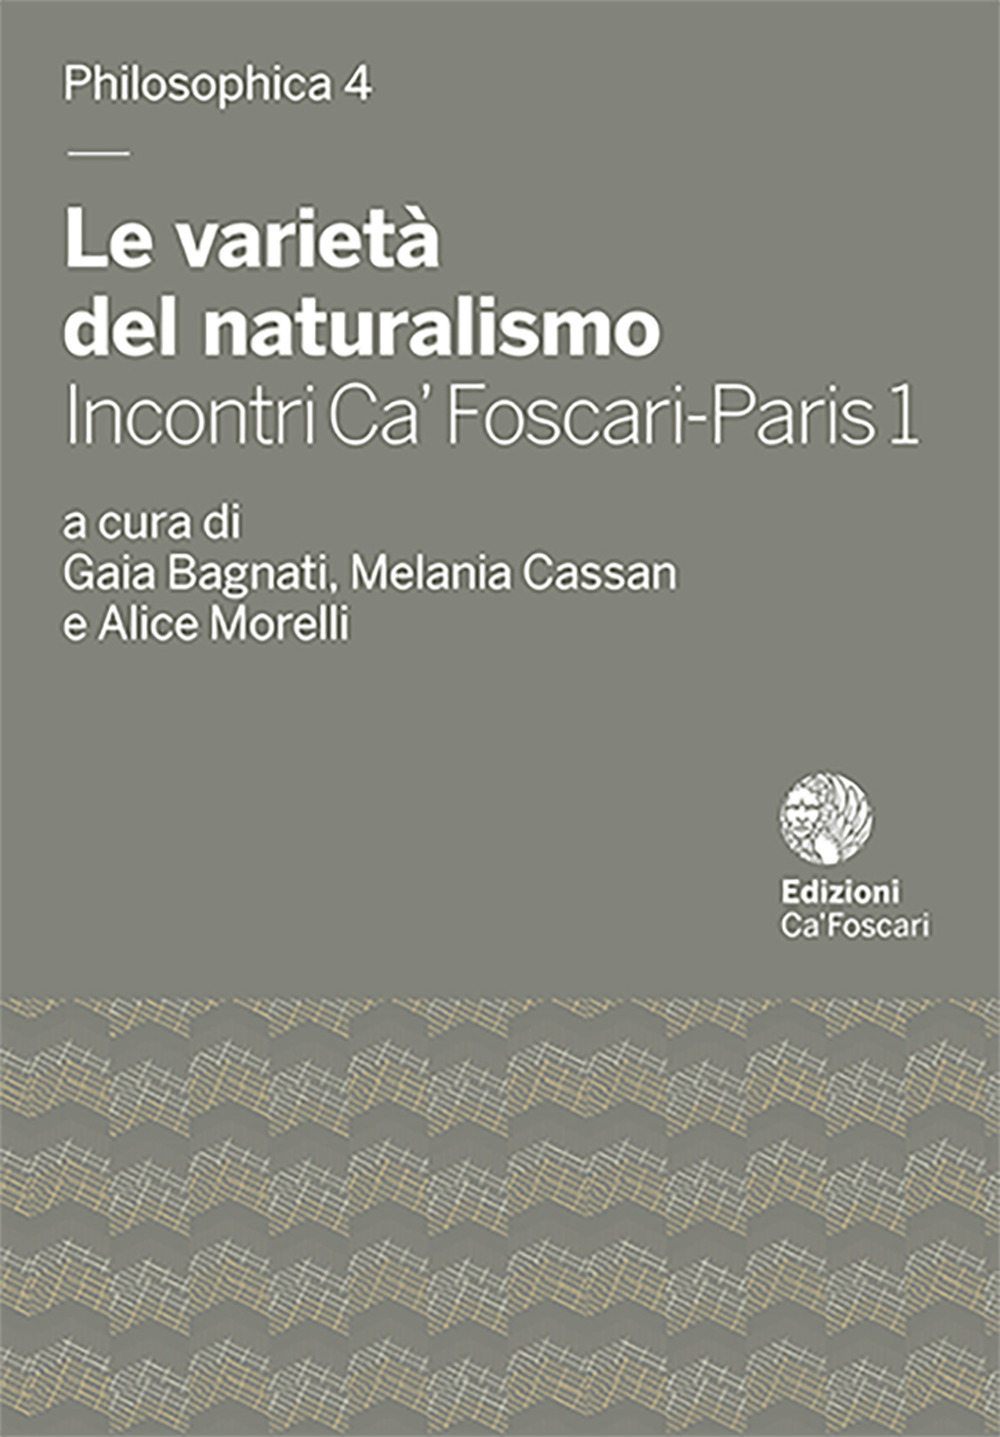 Le varietà del naturalismo. Incontri Ca' Foscari-Paris 1